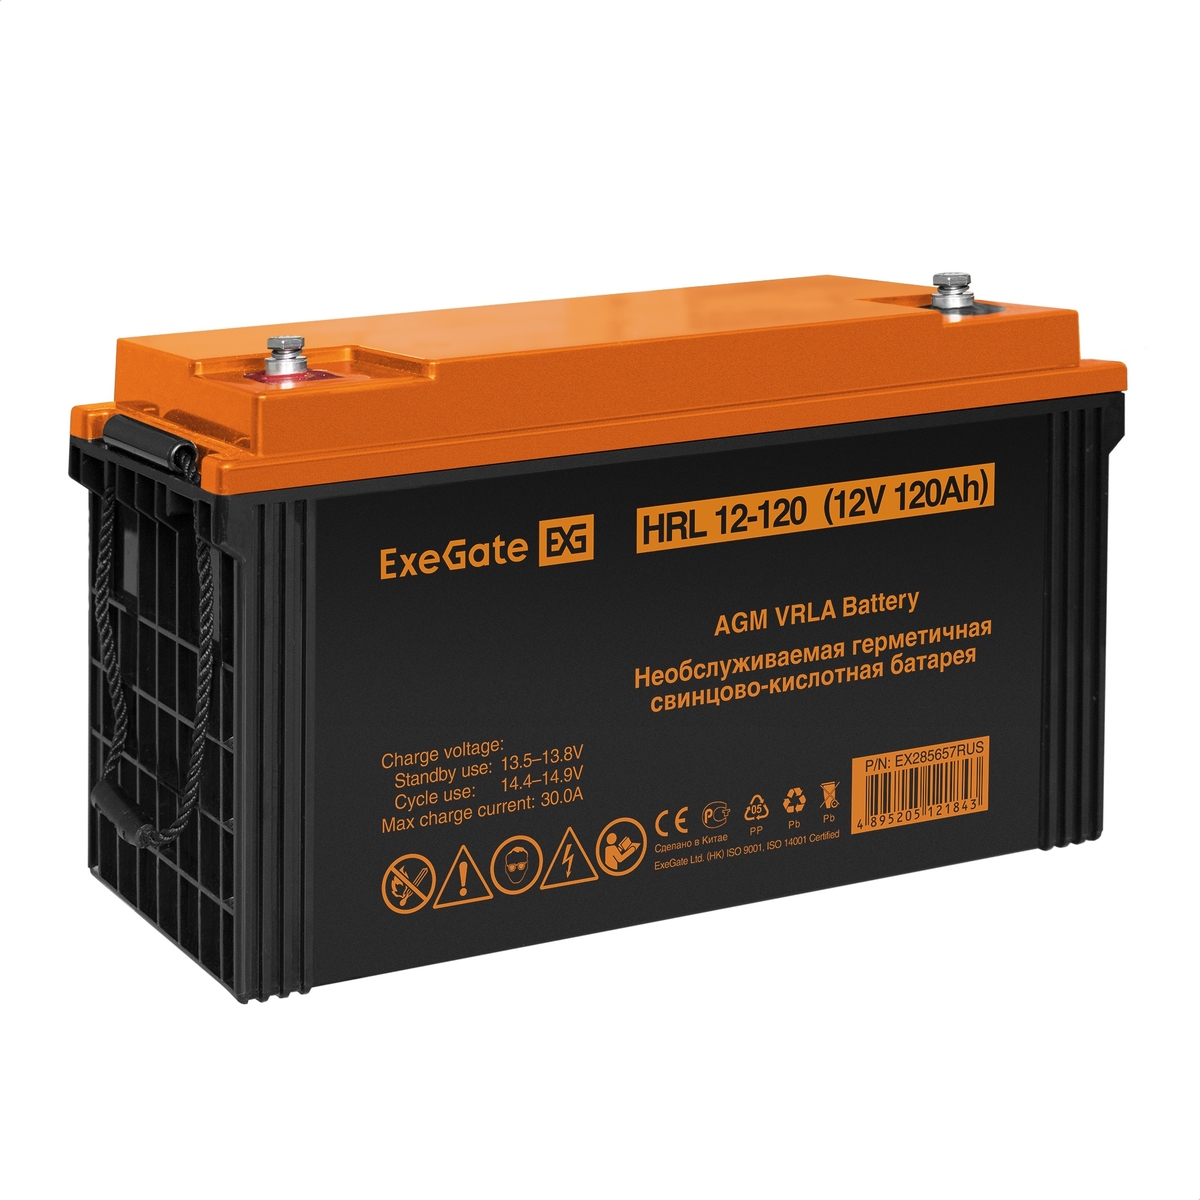 UPS set EX296003 + battery 120Ah EX285657 4 piece